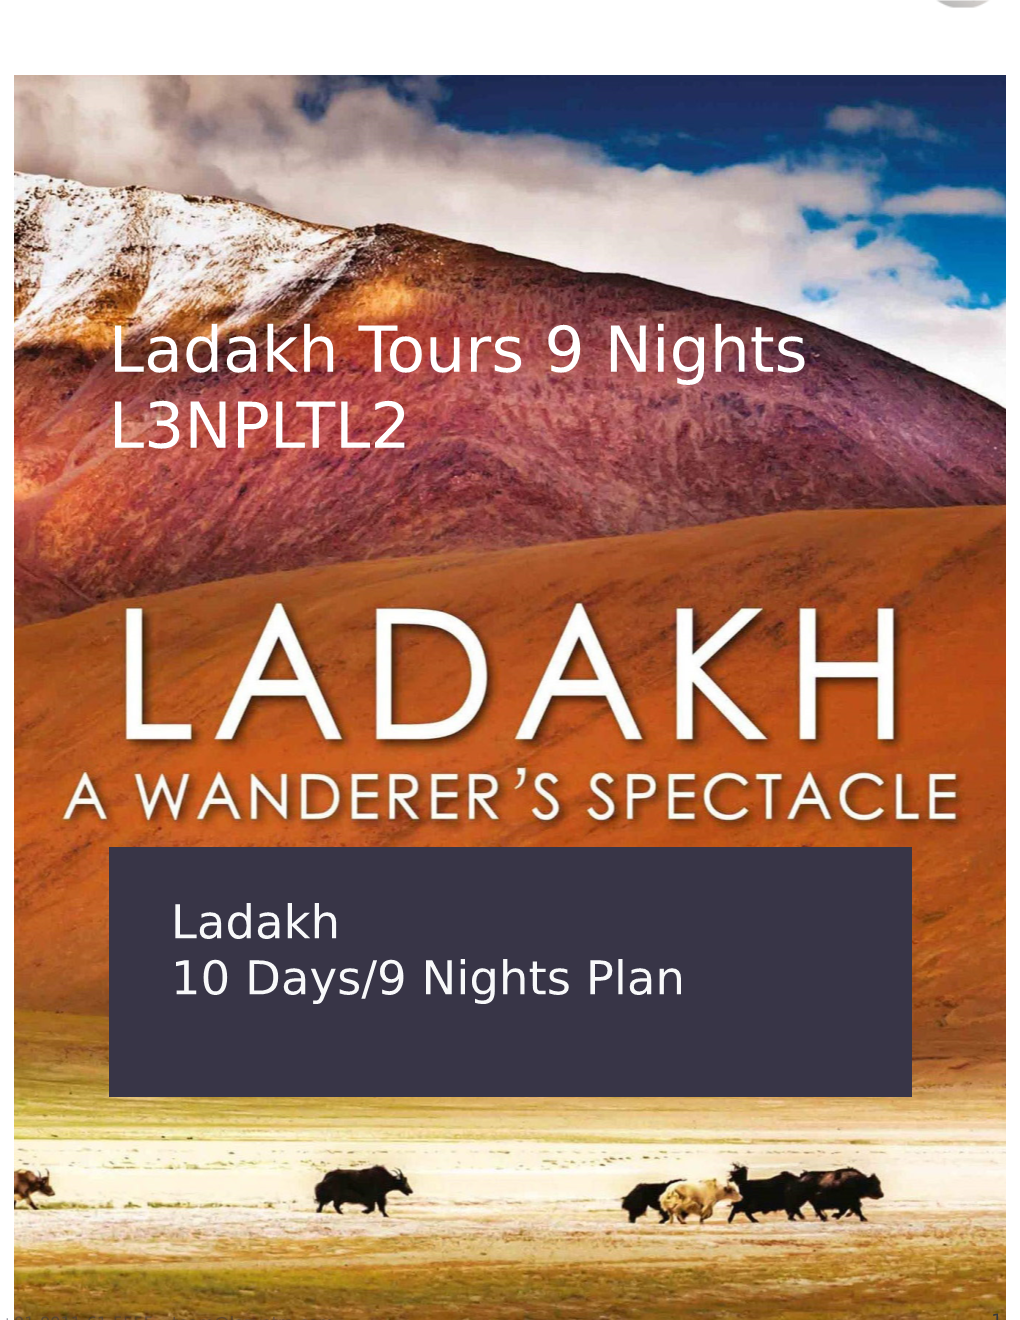 Ladakh Tours 9 Nights L3NPLTL2